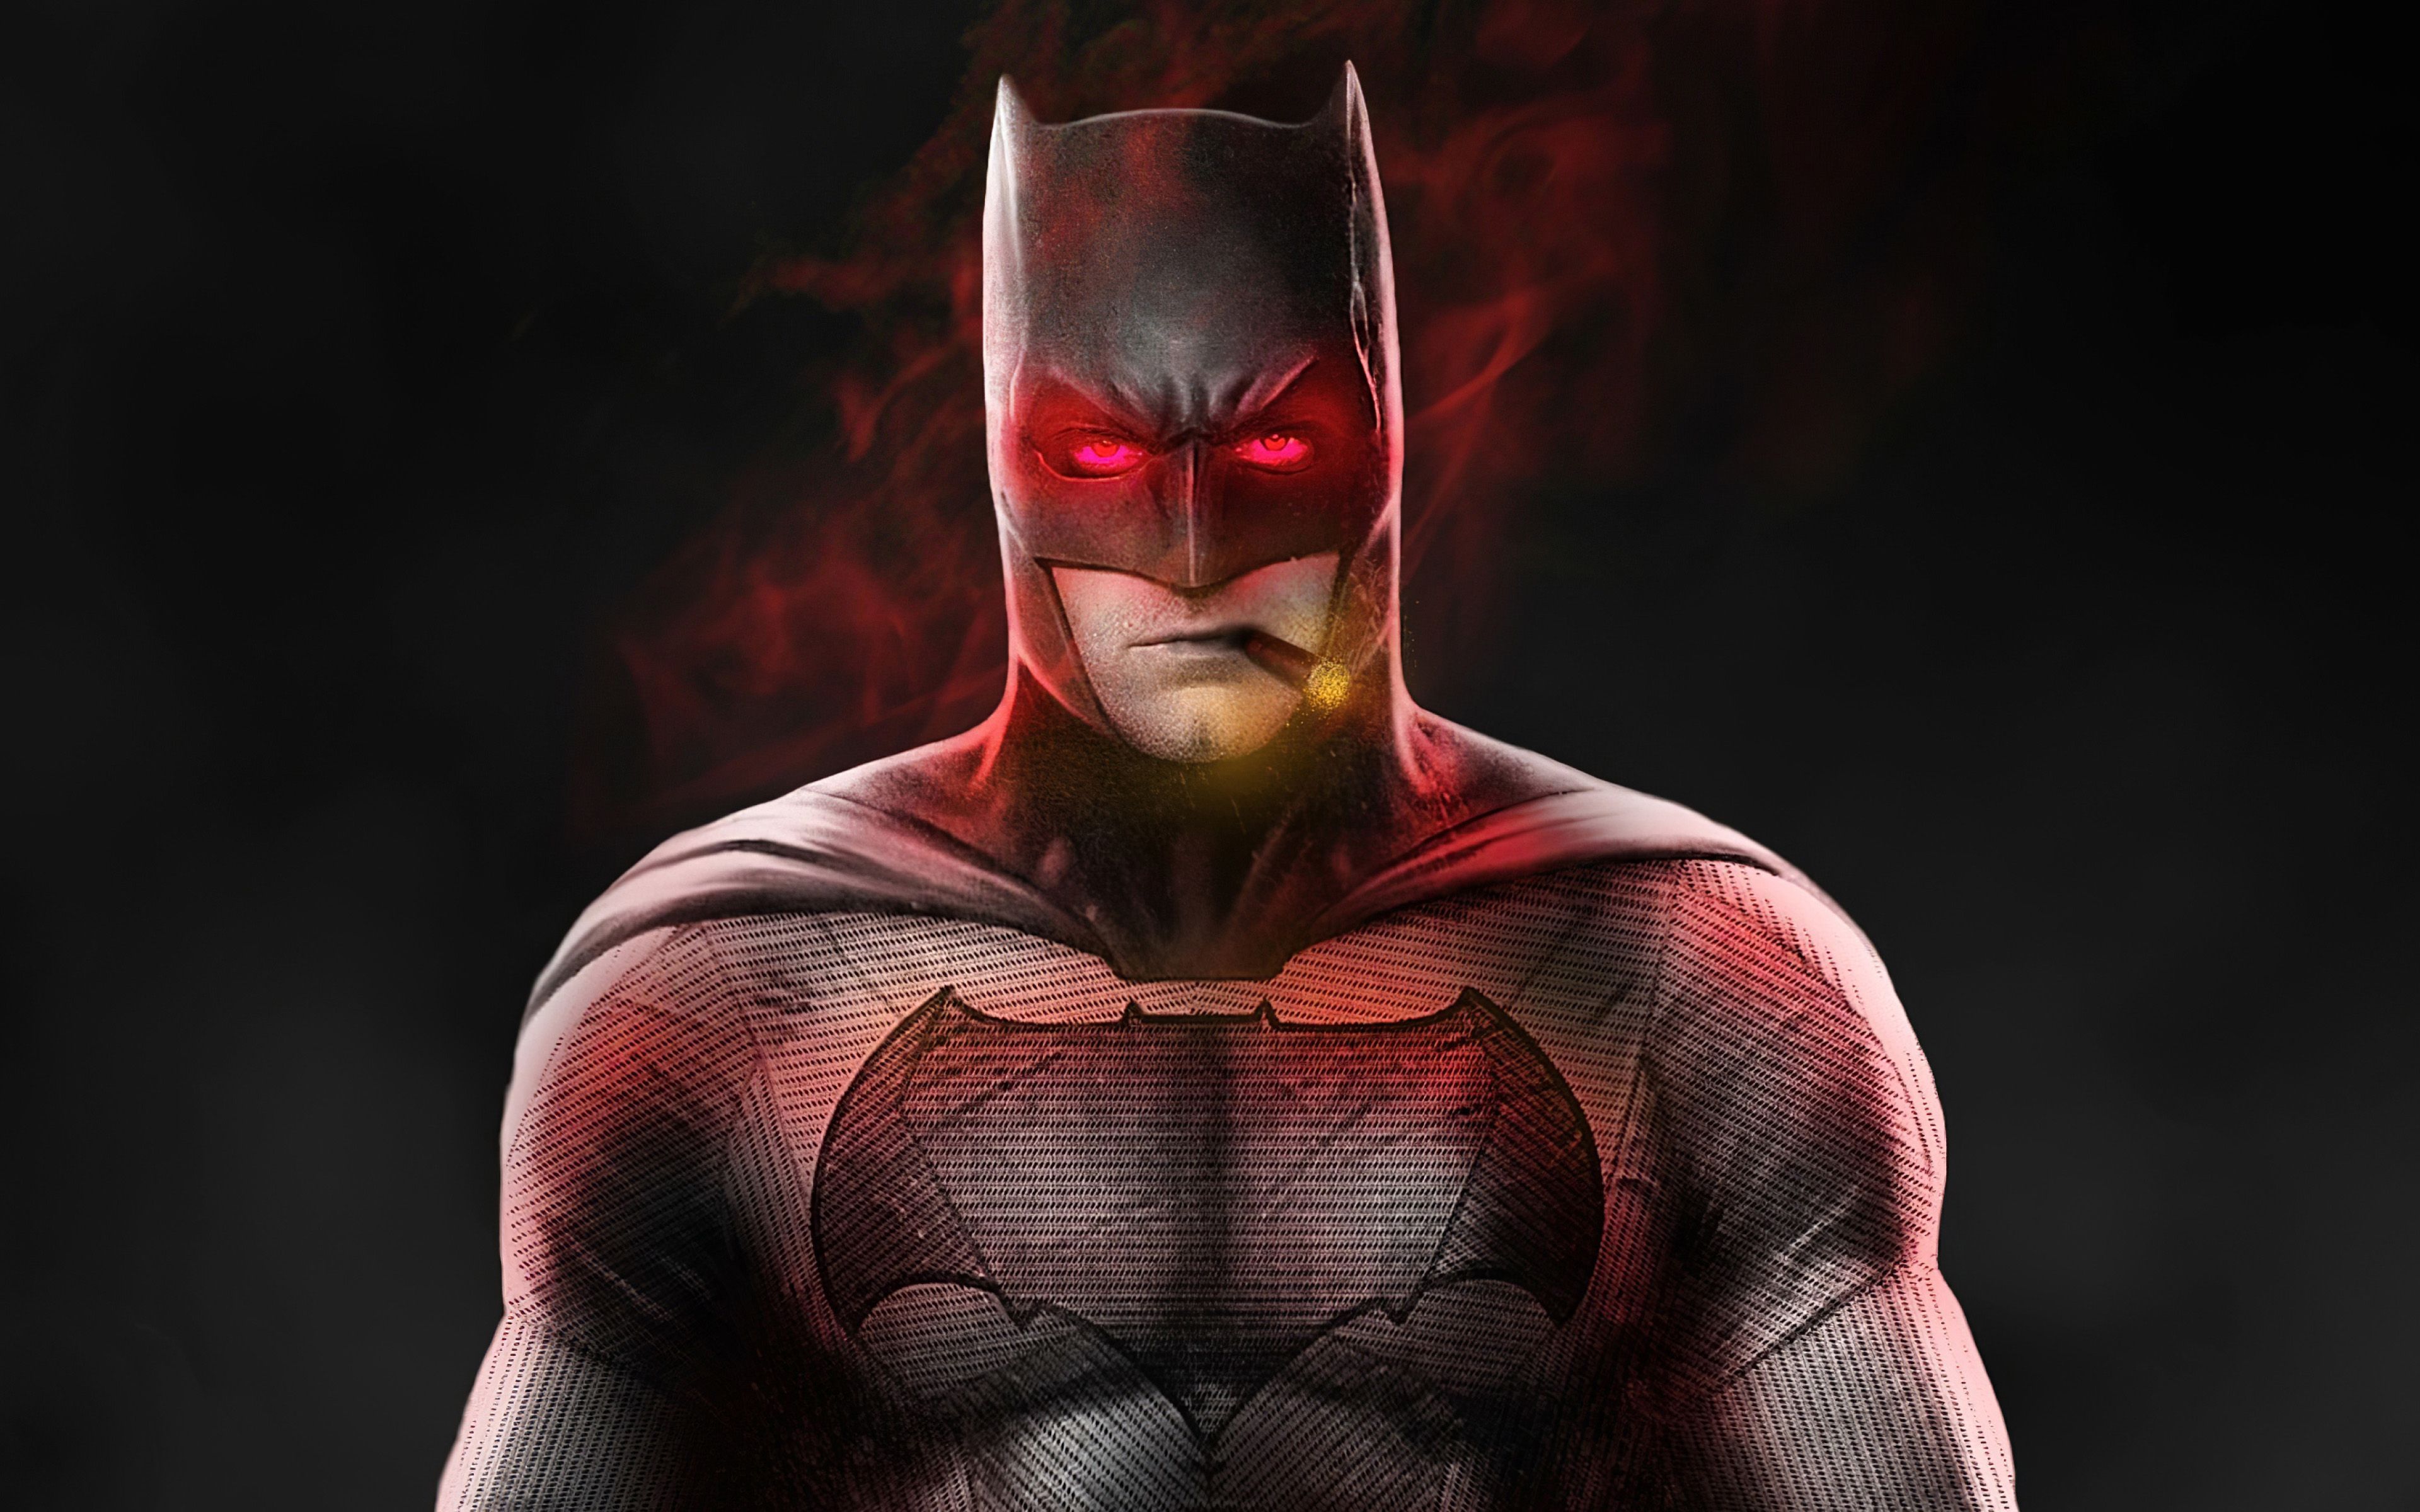 Download Wallpaper Batfleck, 4k, Supeheroes, Batman, Artwork, Robert Pattinson, Bat Man For Desktop With Resolution 3840x2400. High Quality HD Picture Wallpaper